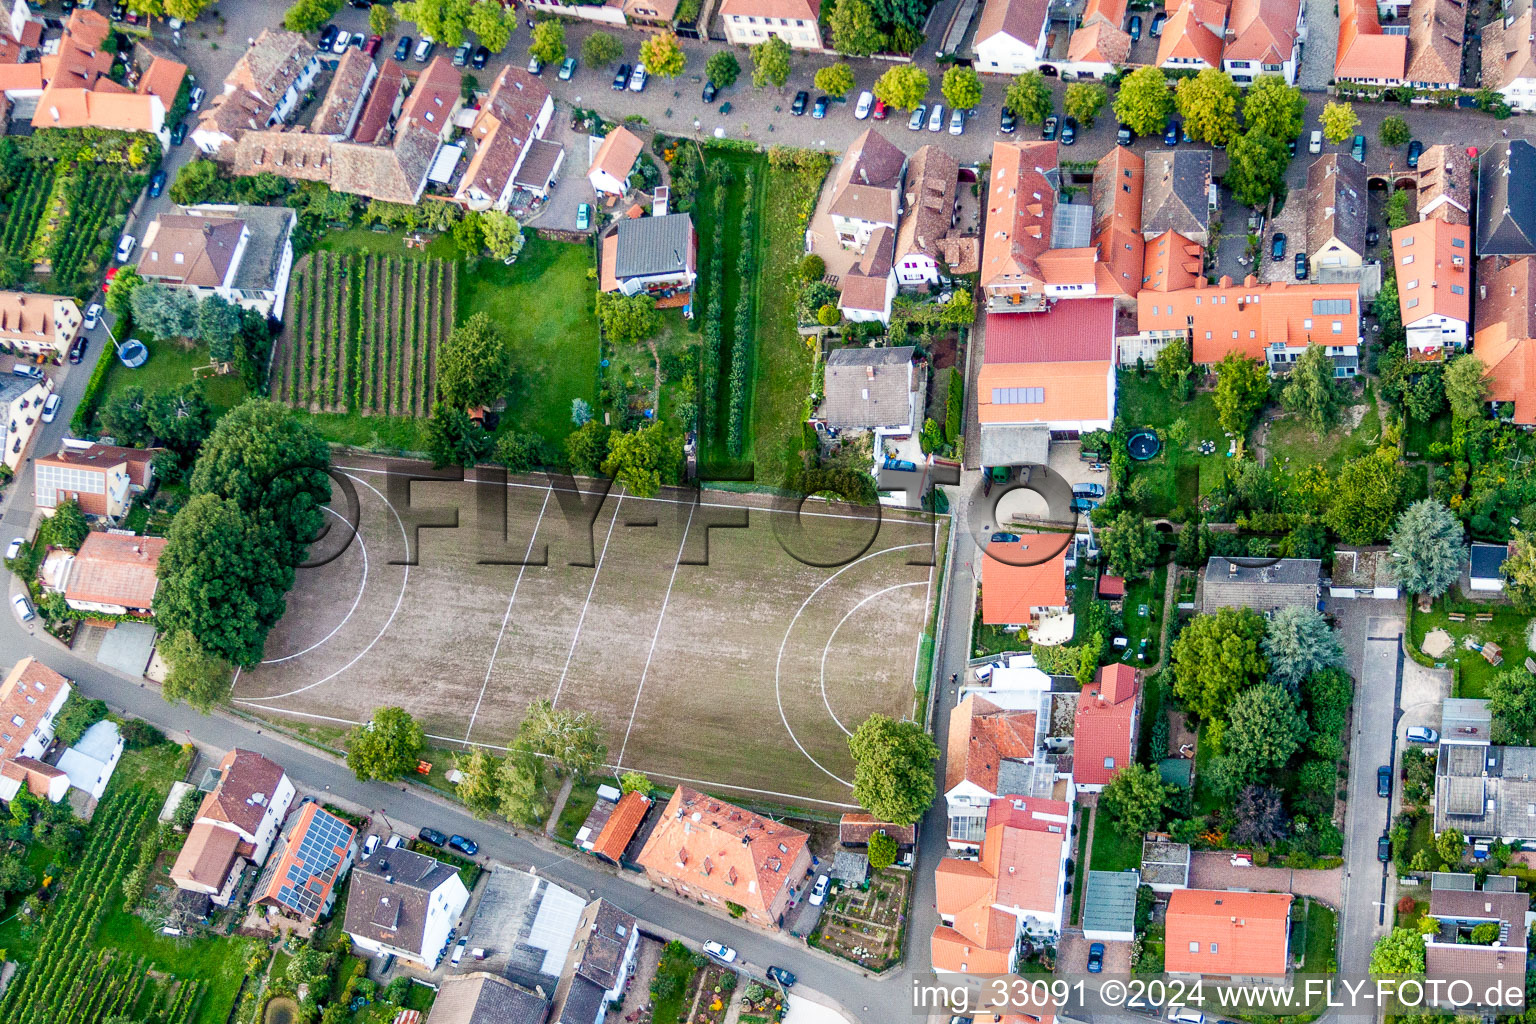 Sports grounds and football pitch of Freizeitanlage in Rhodt unter Rietburg in the state Rhineland-Palatinate, Germany